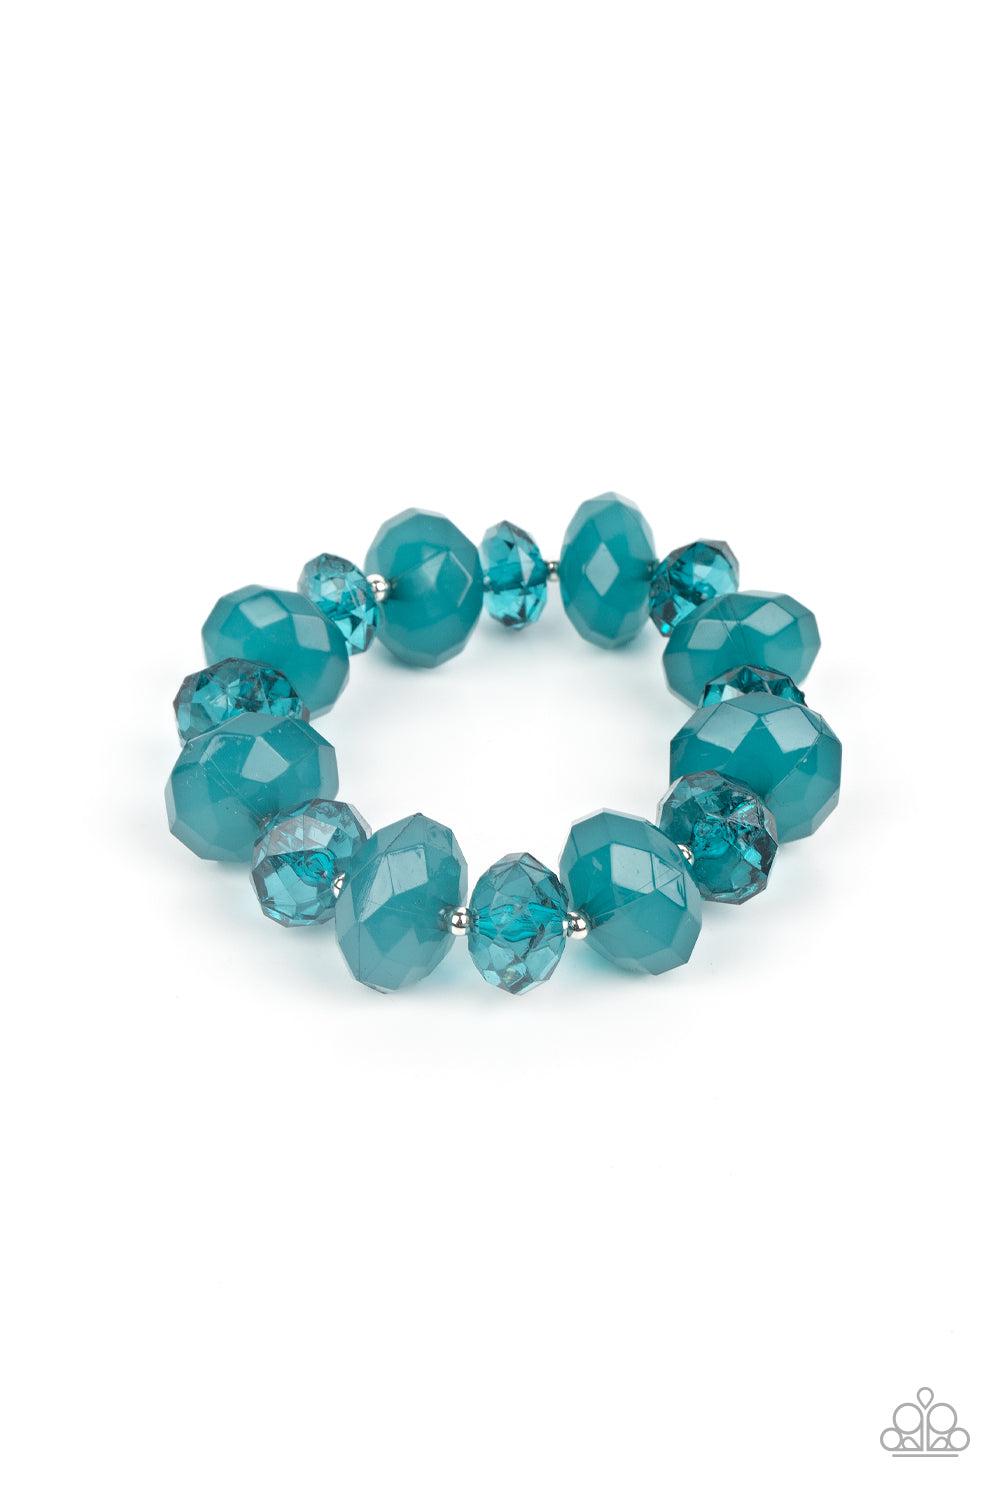 Keep GLOWING Forward Blue Bracelet - Paparazzi Accessories- lightbox - CarasShop.com - $5 Jewelry by Cara Jewels